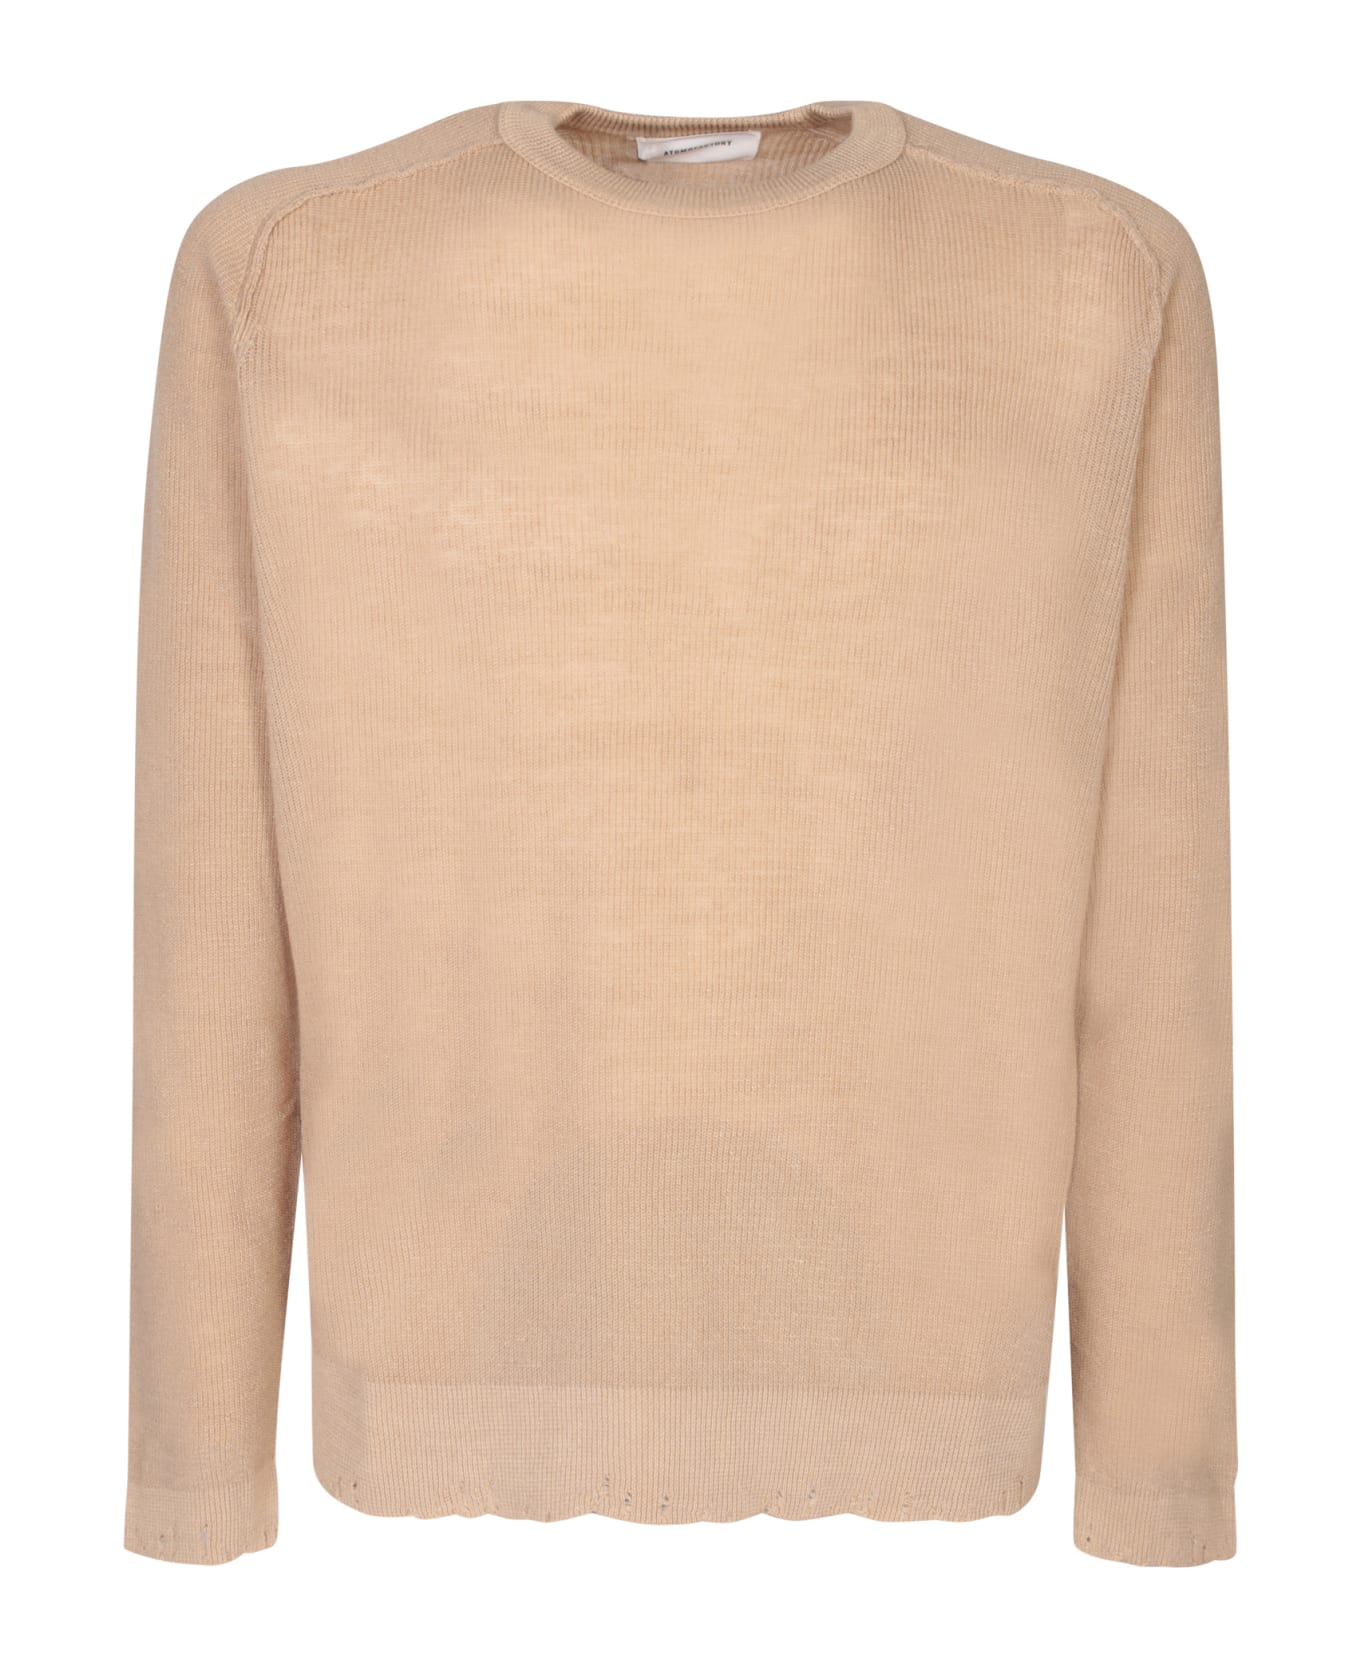 Atomo Factory Beige Linen And Cotton Sweater - Beige フリース